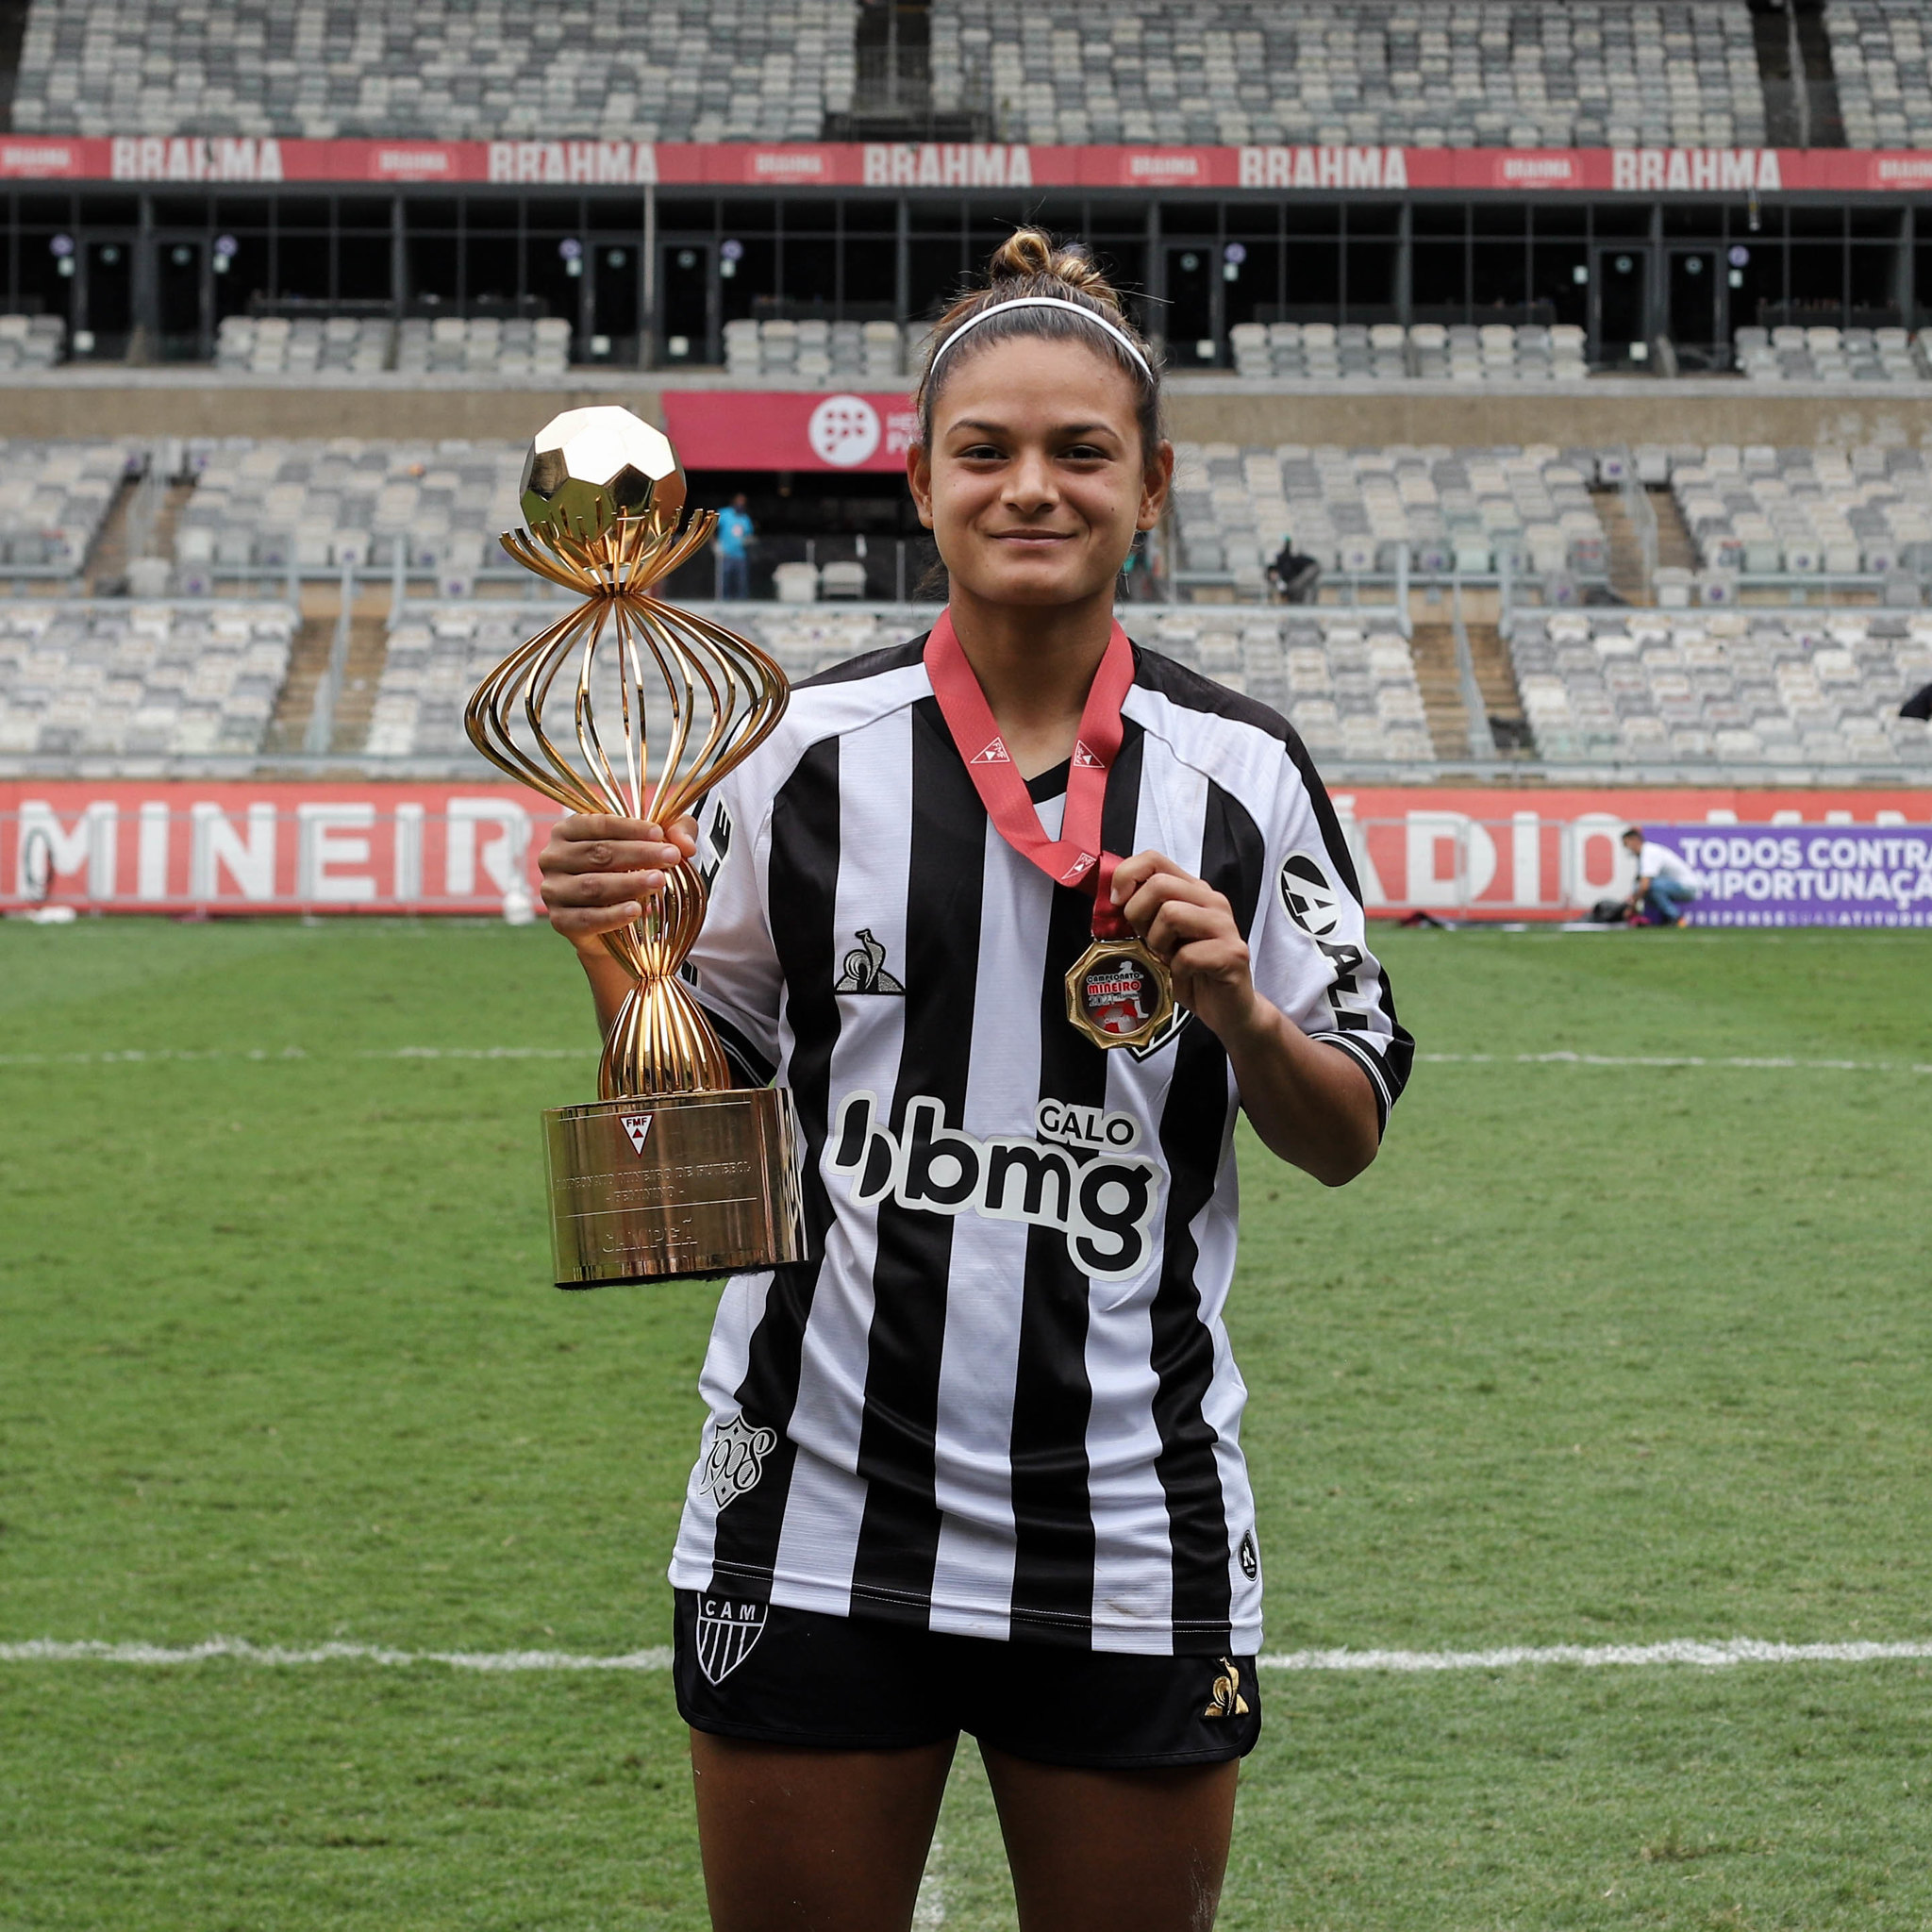 Hilary con su primer Campeonato Mineiro / Bruno Sousa / Atlético